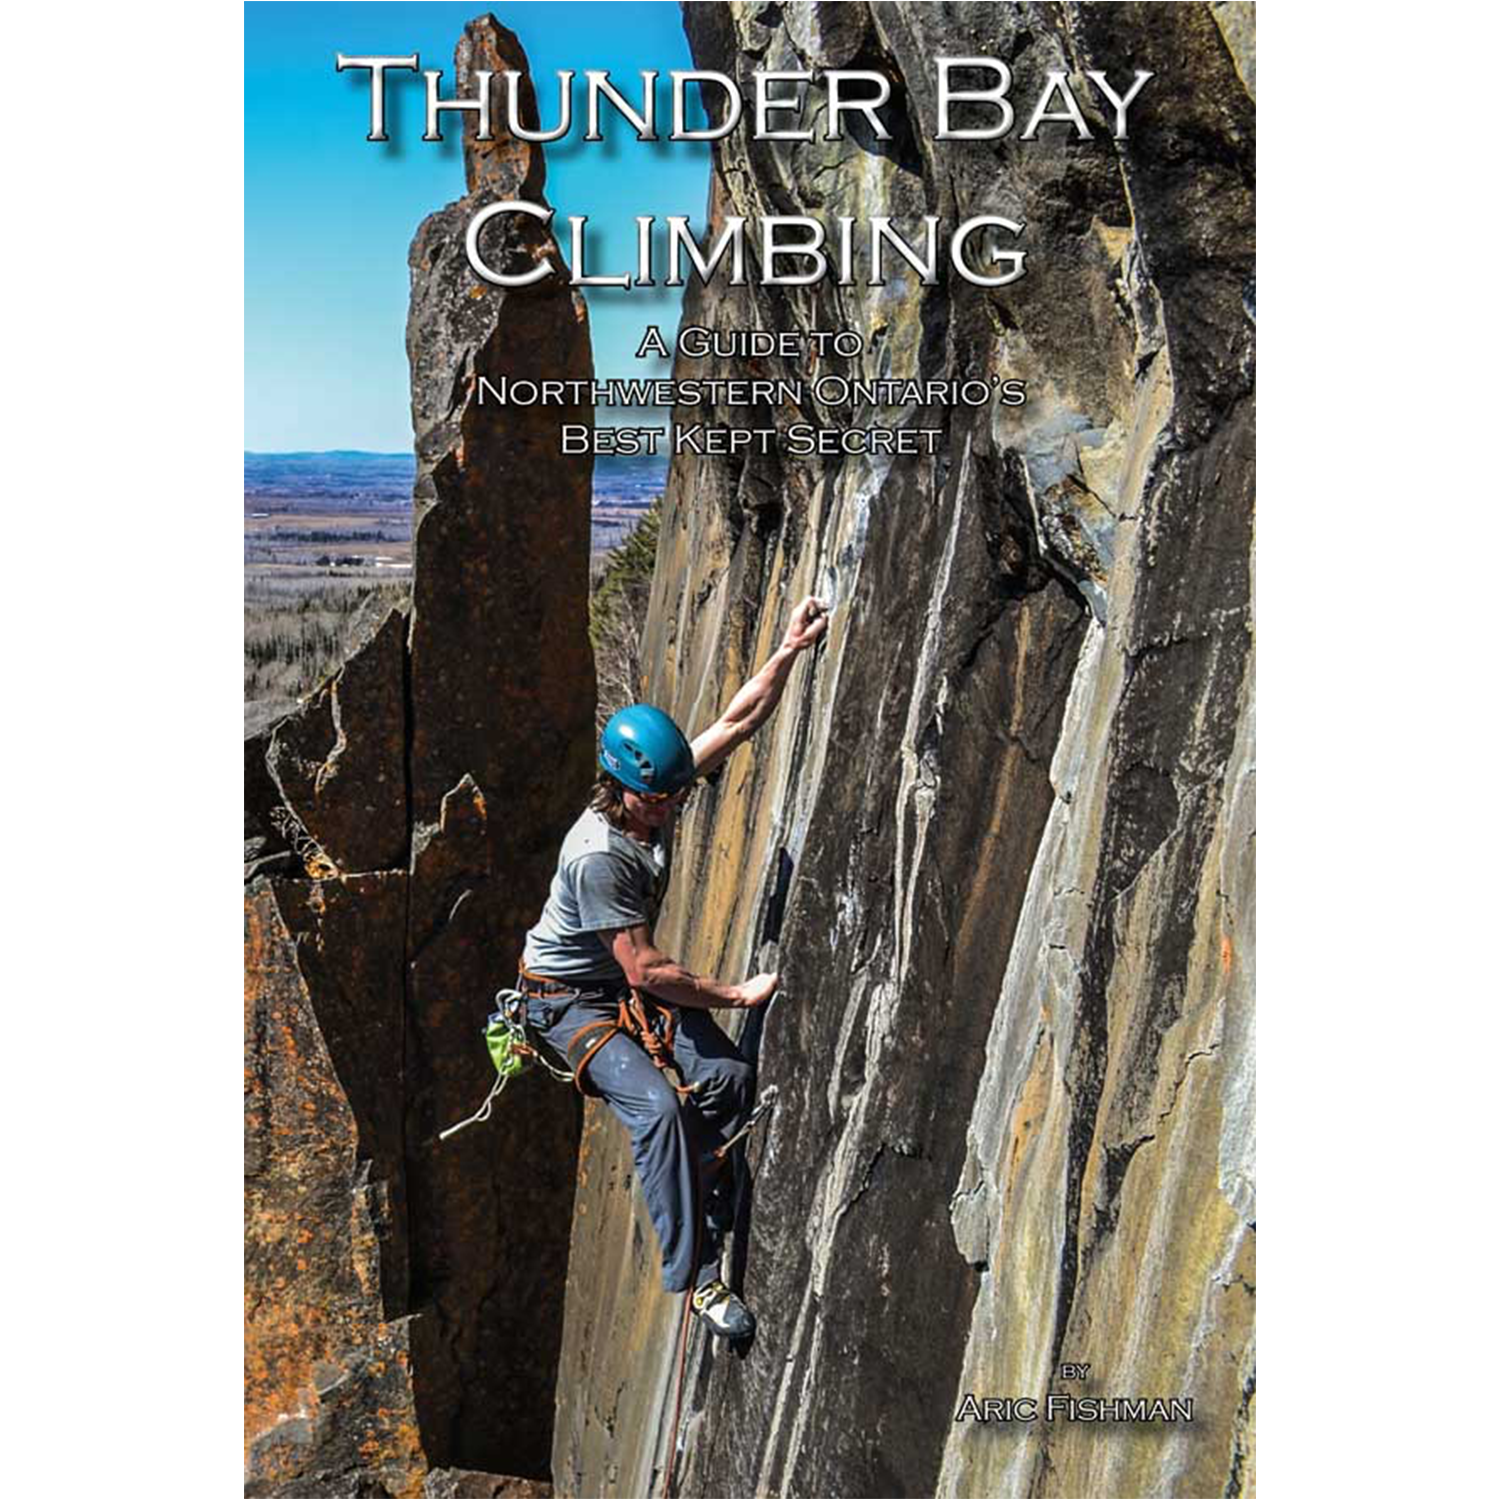 Thunder Bay Climbing: A Guide To Northwestern Ontario’s Best Kept Secret